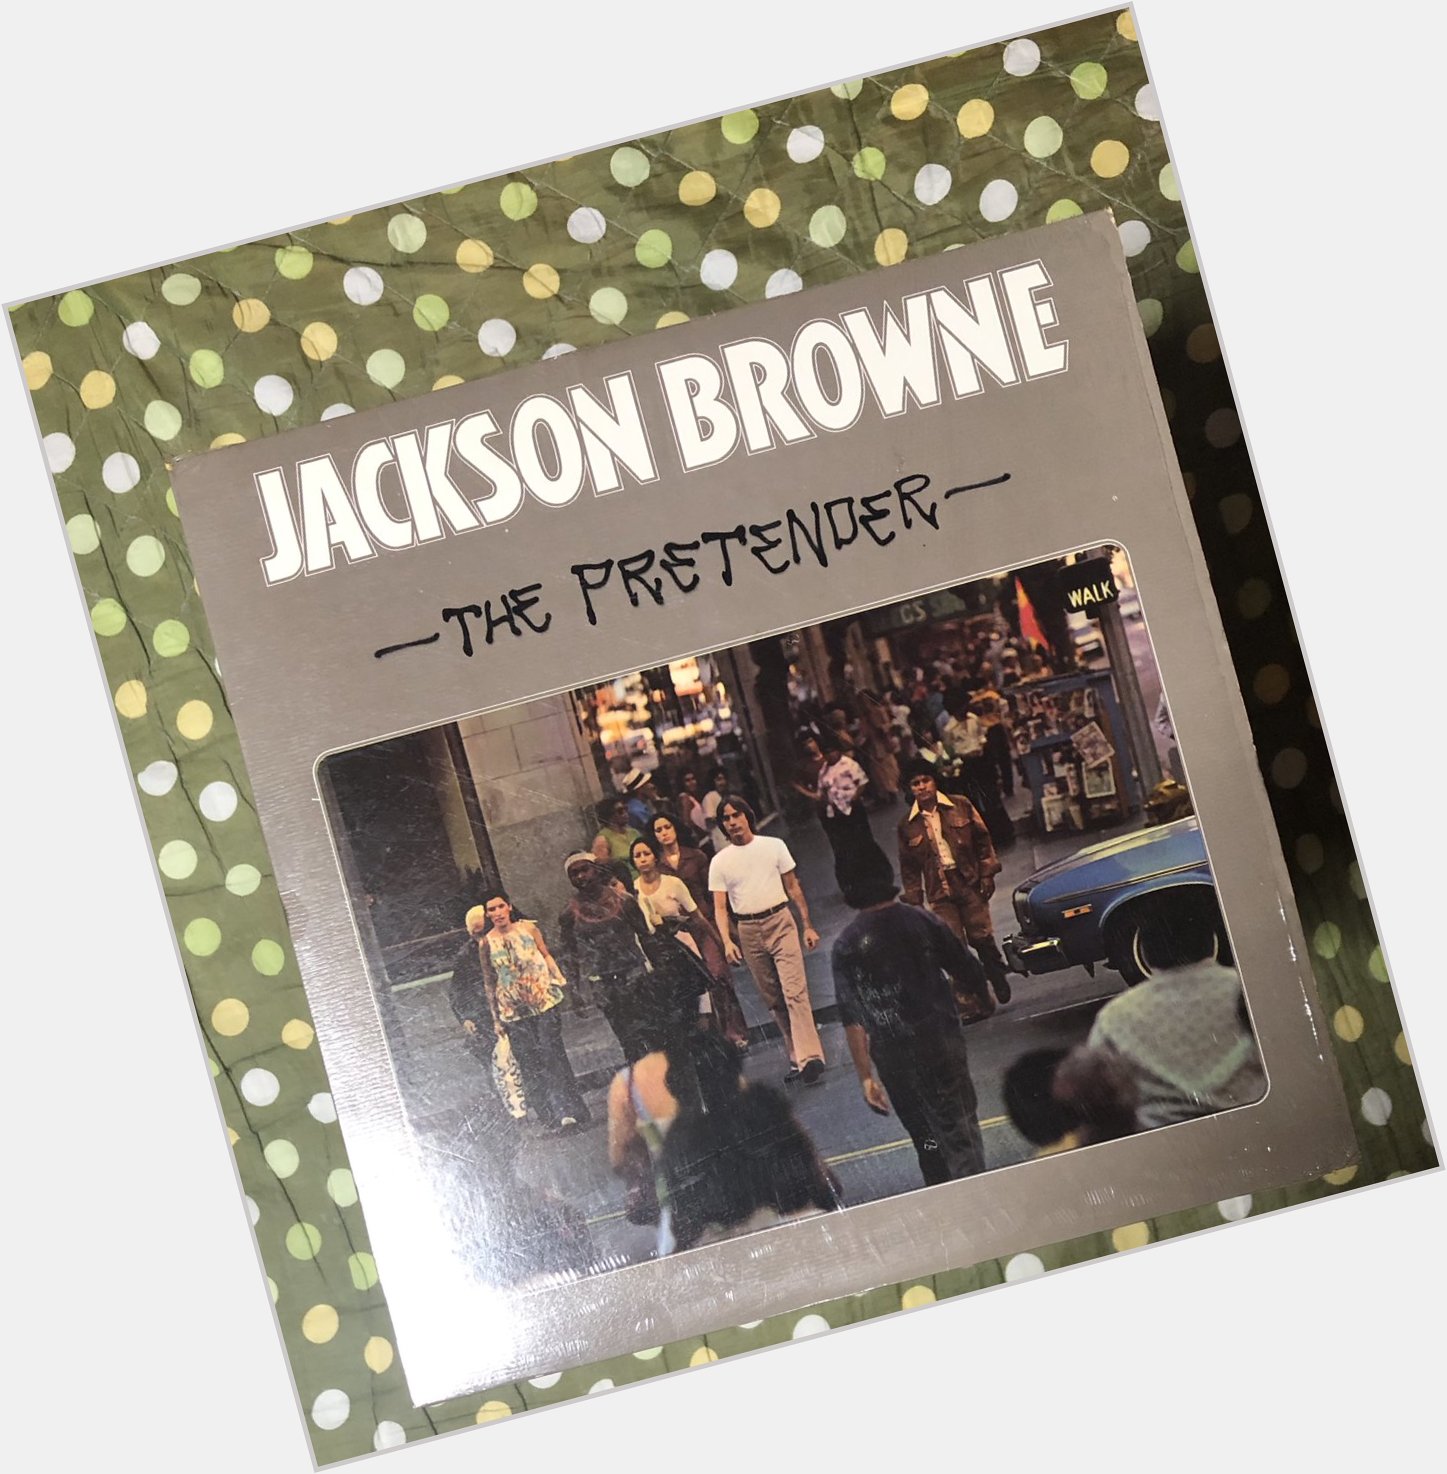                                 happy birthday 

Jackson Browne /The Pretender 